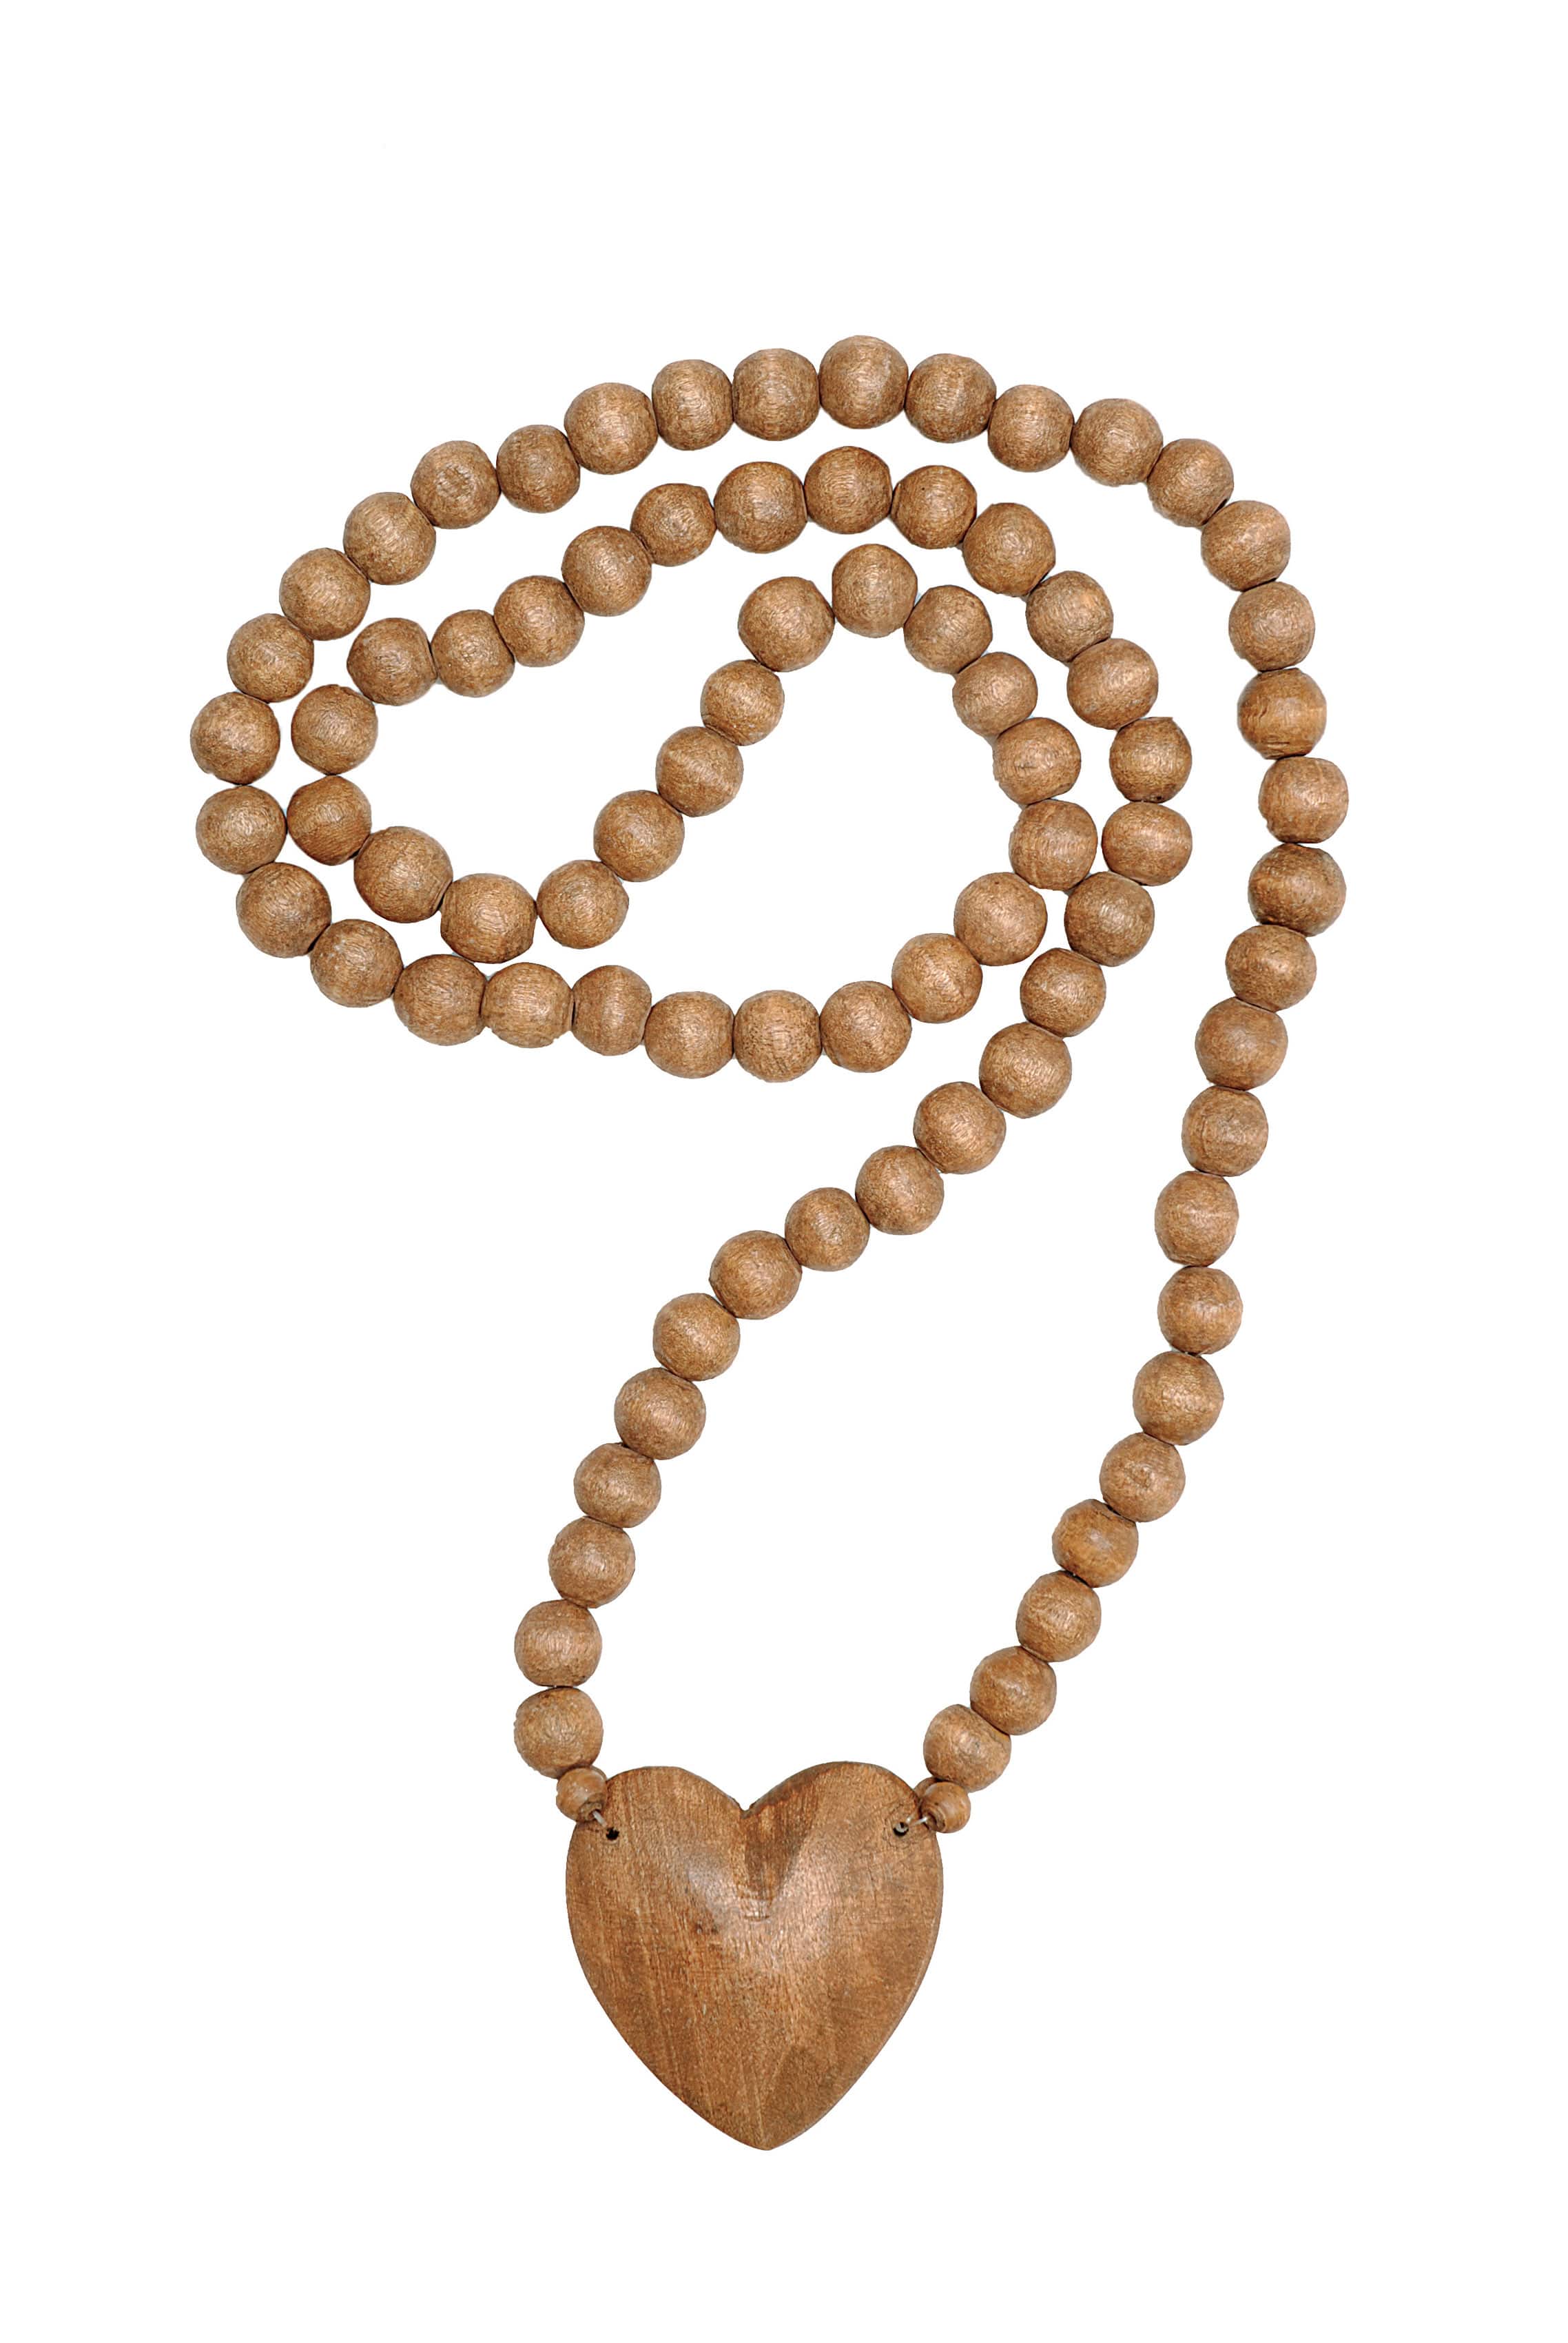 Wooden Heart Prayer Beads, Large